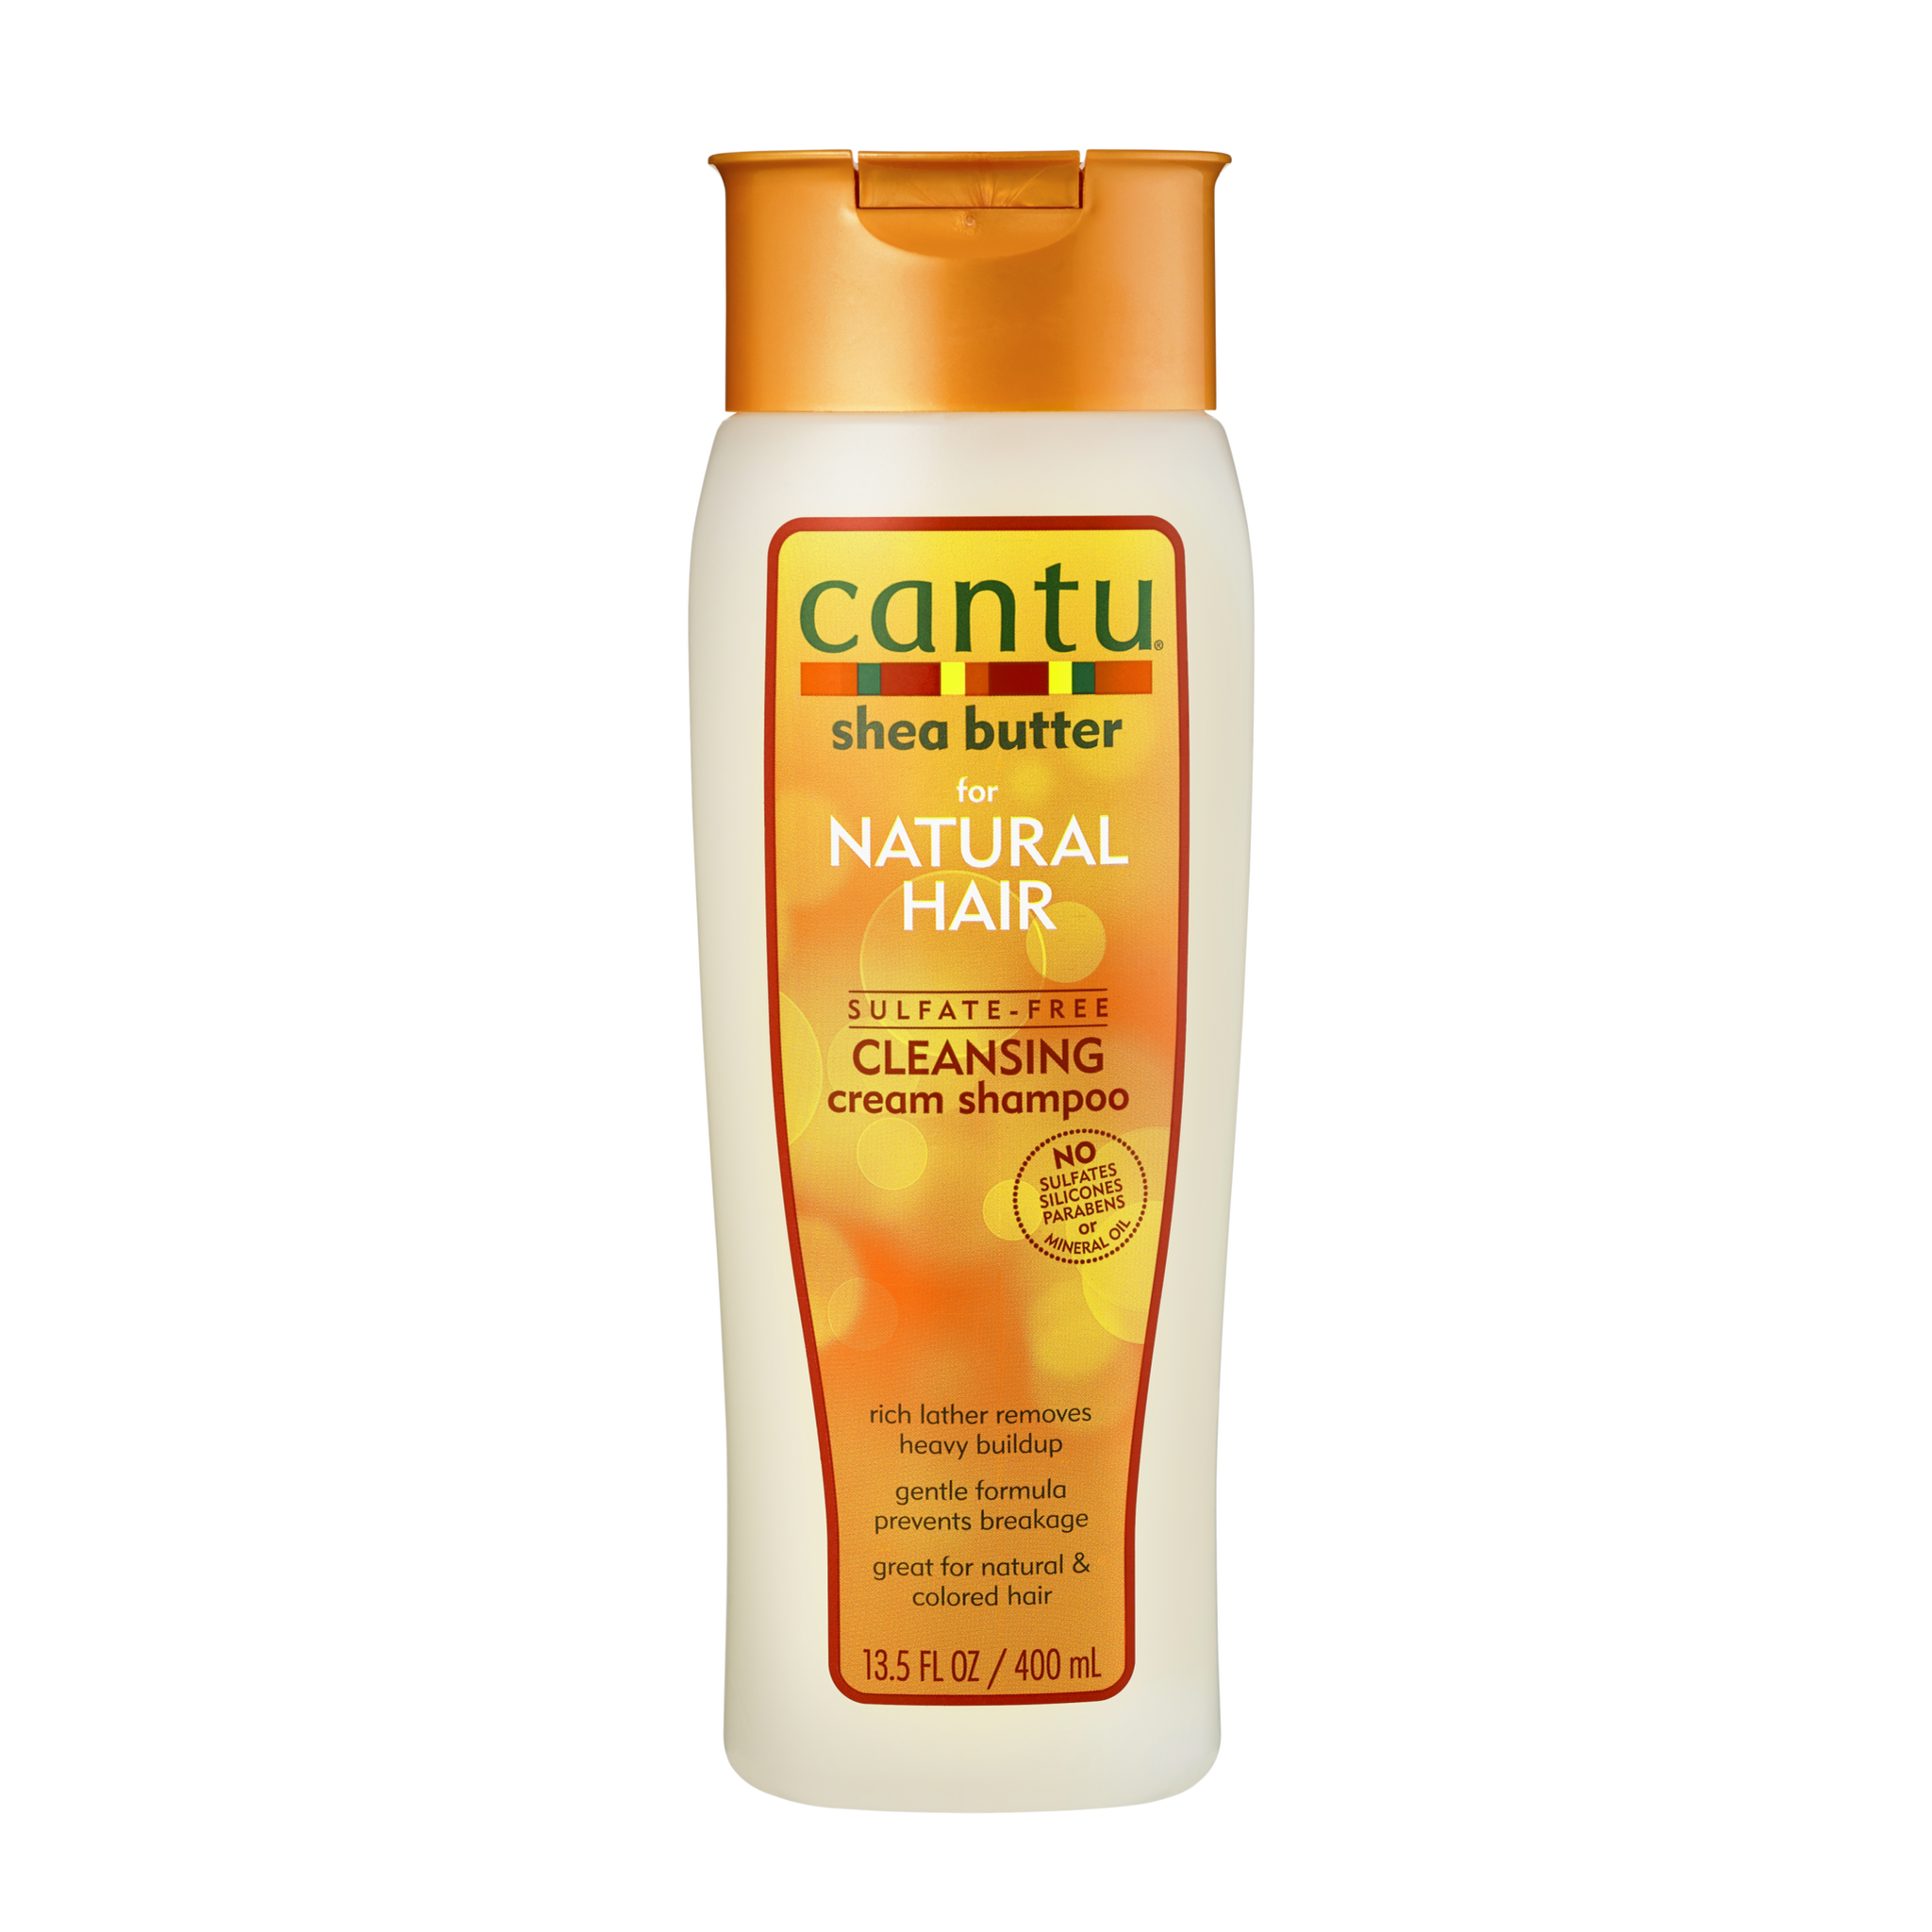 Cantu Shea Butter Natural Hair Cleansing Cream Shampoo